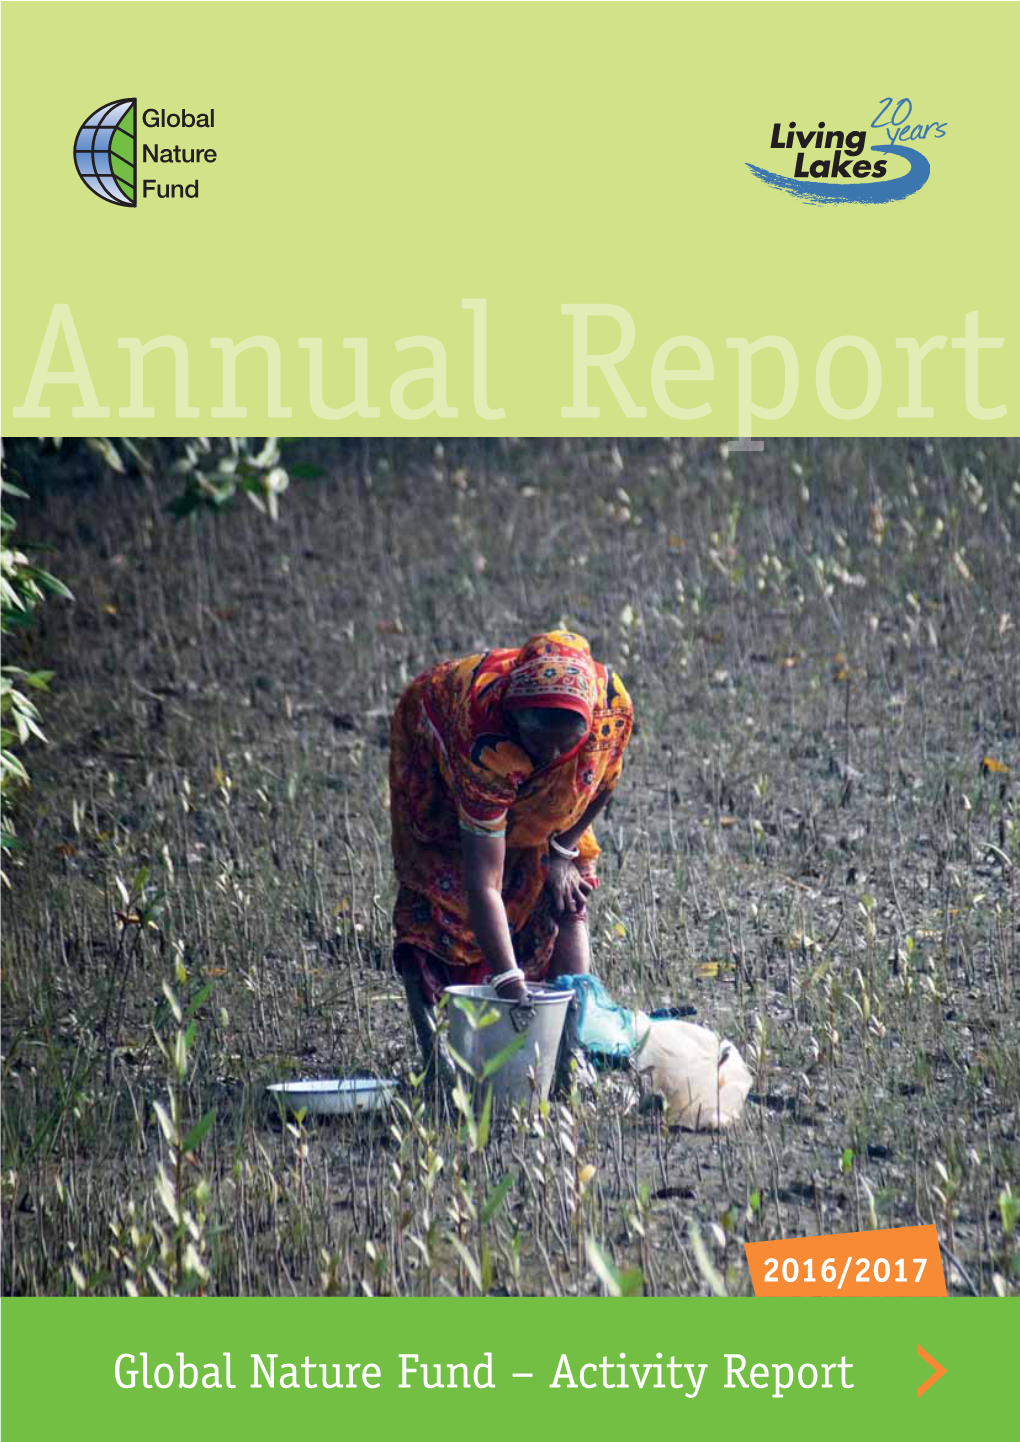 GNF Annual Report 2016/2017